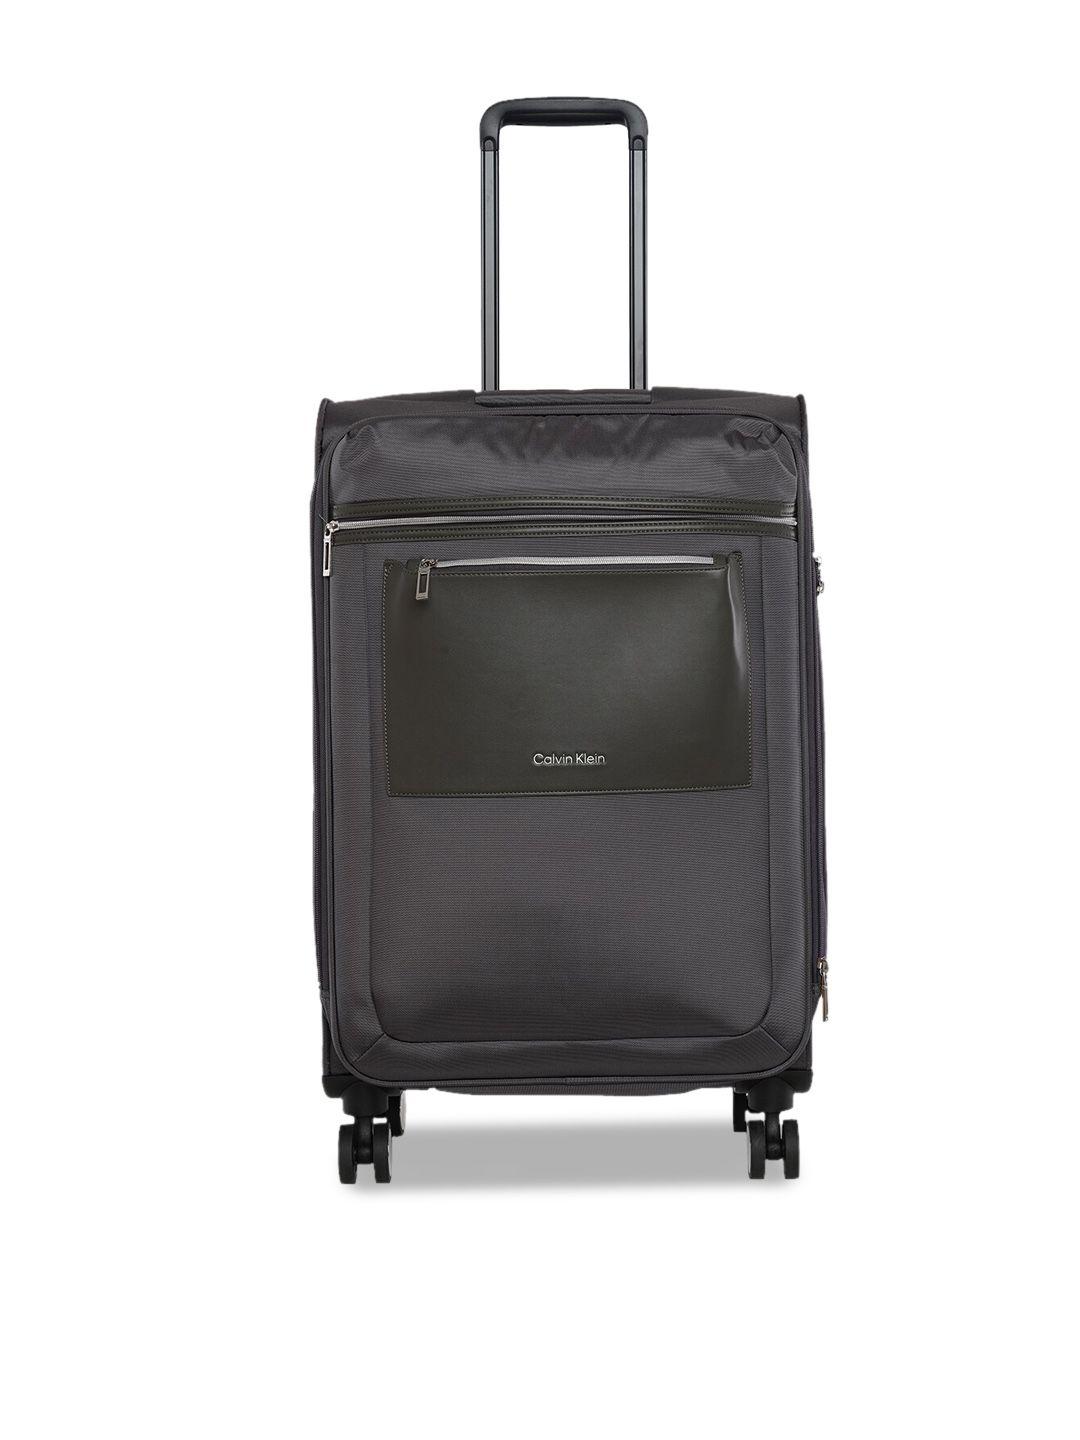 calvin klein union square range dark grey color soft case polyester medium size luggage